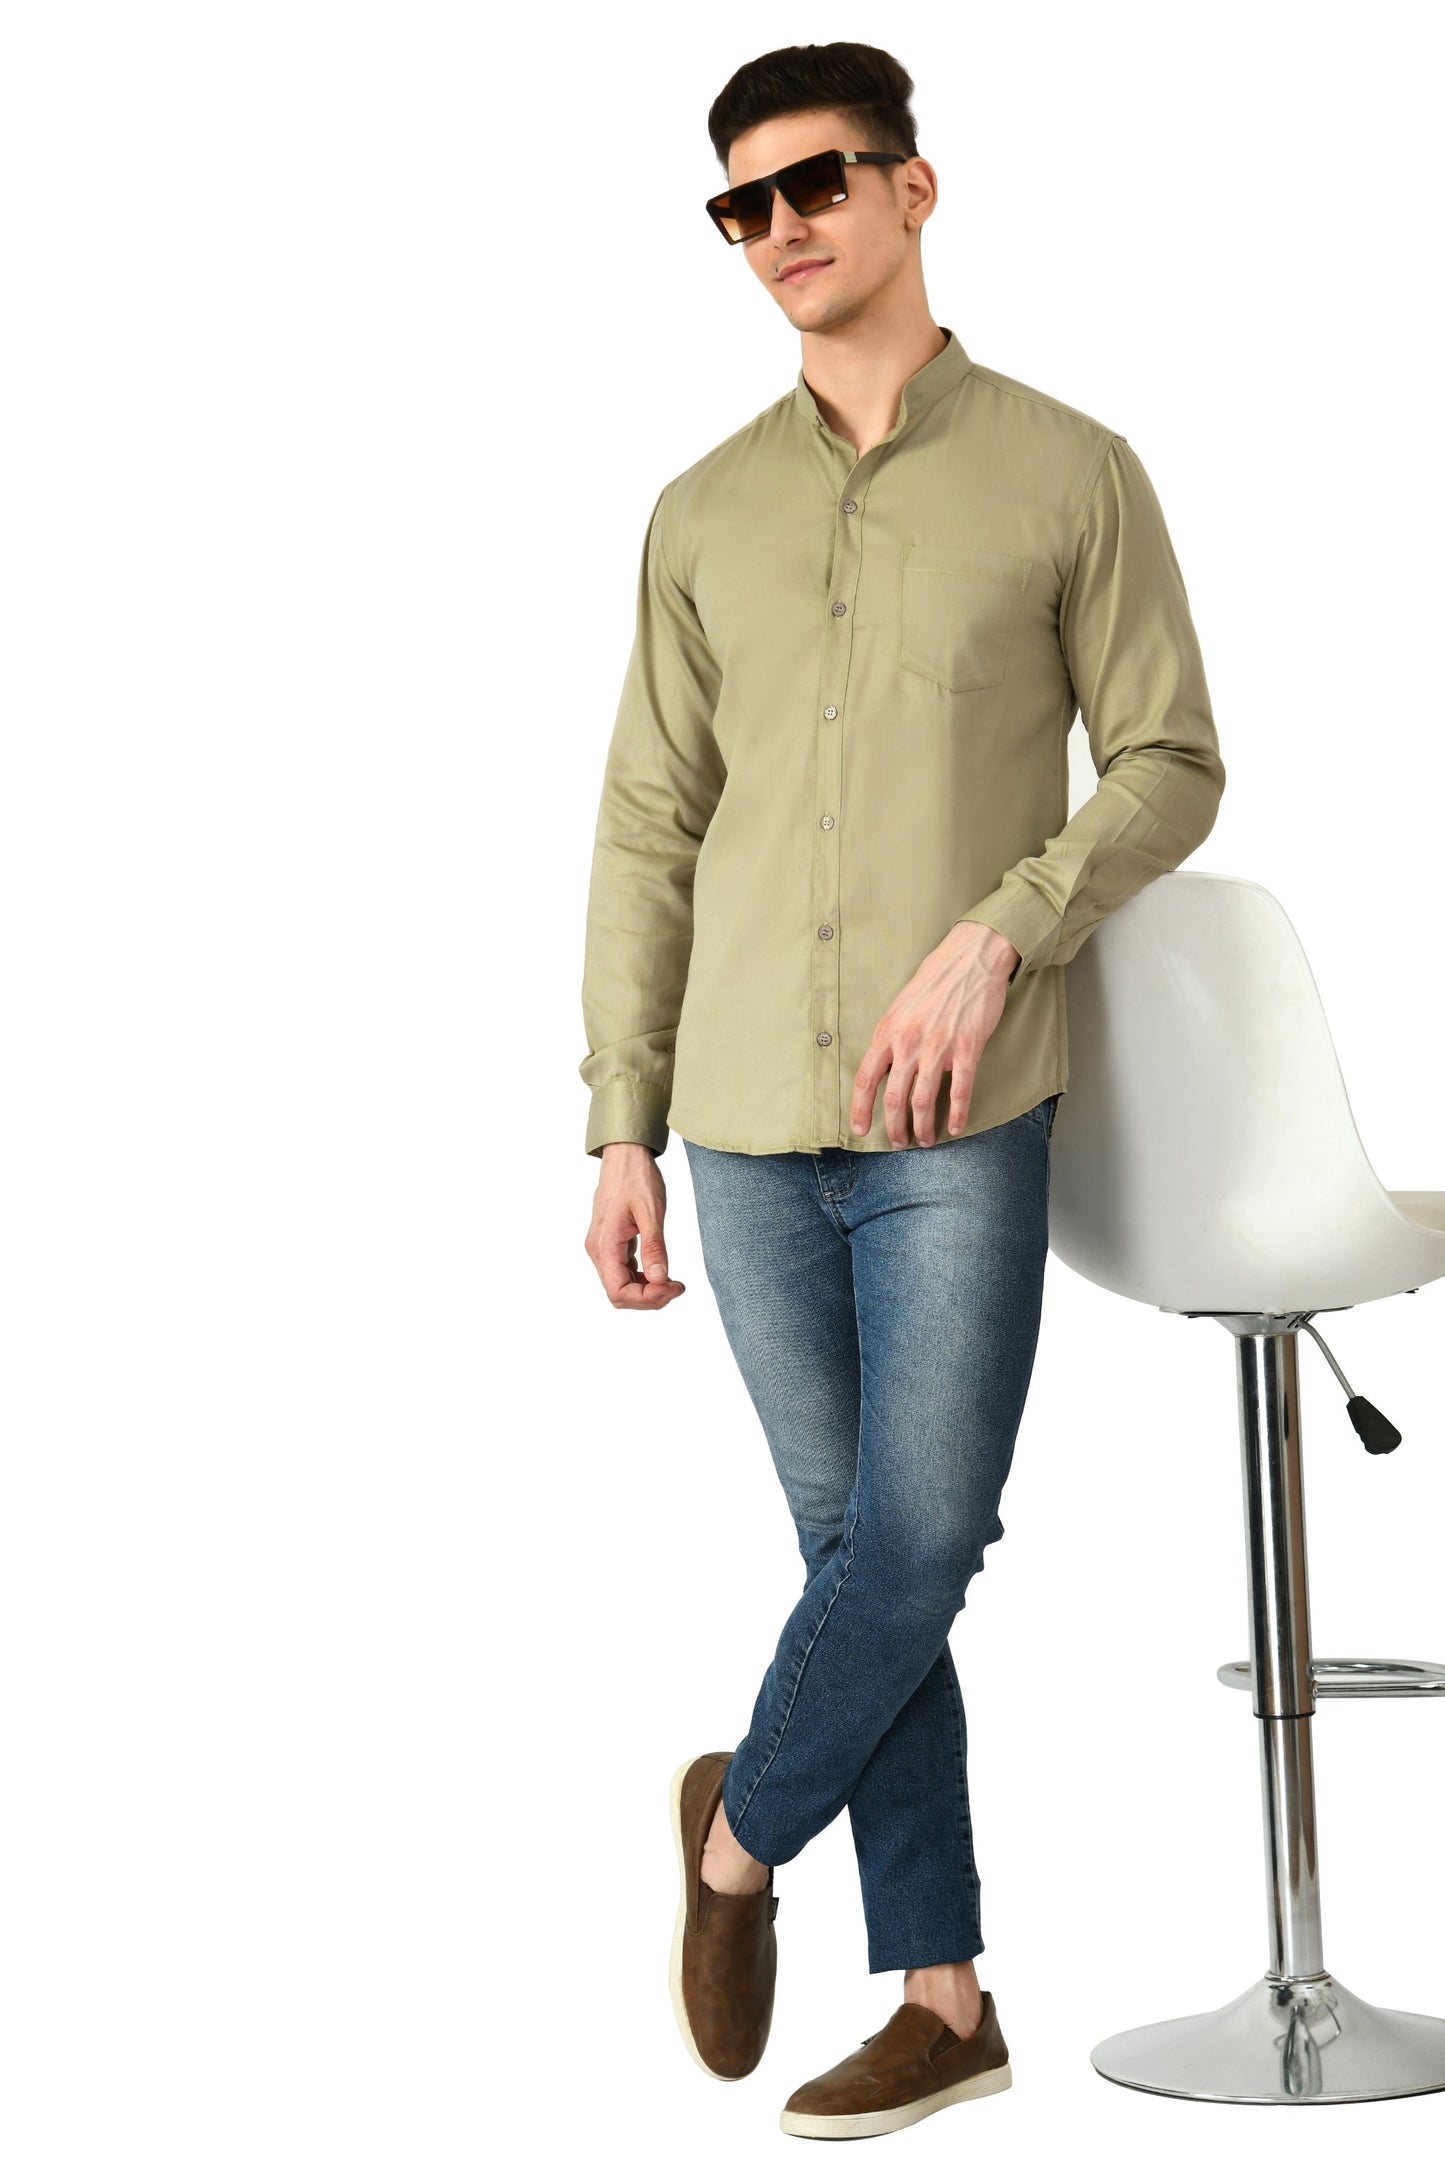 Full Sleeve Cotton Chinese Collar Men's Shirt - Khaki